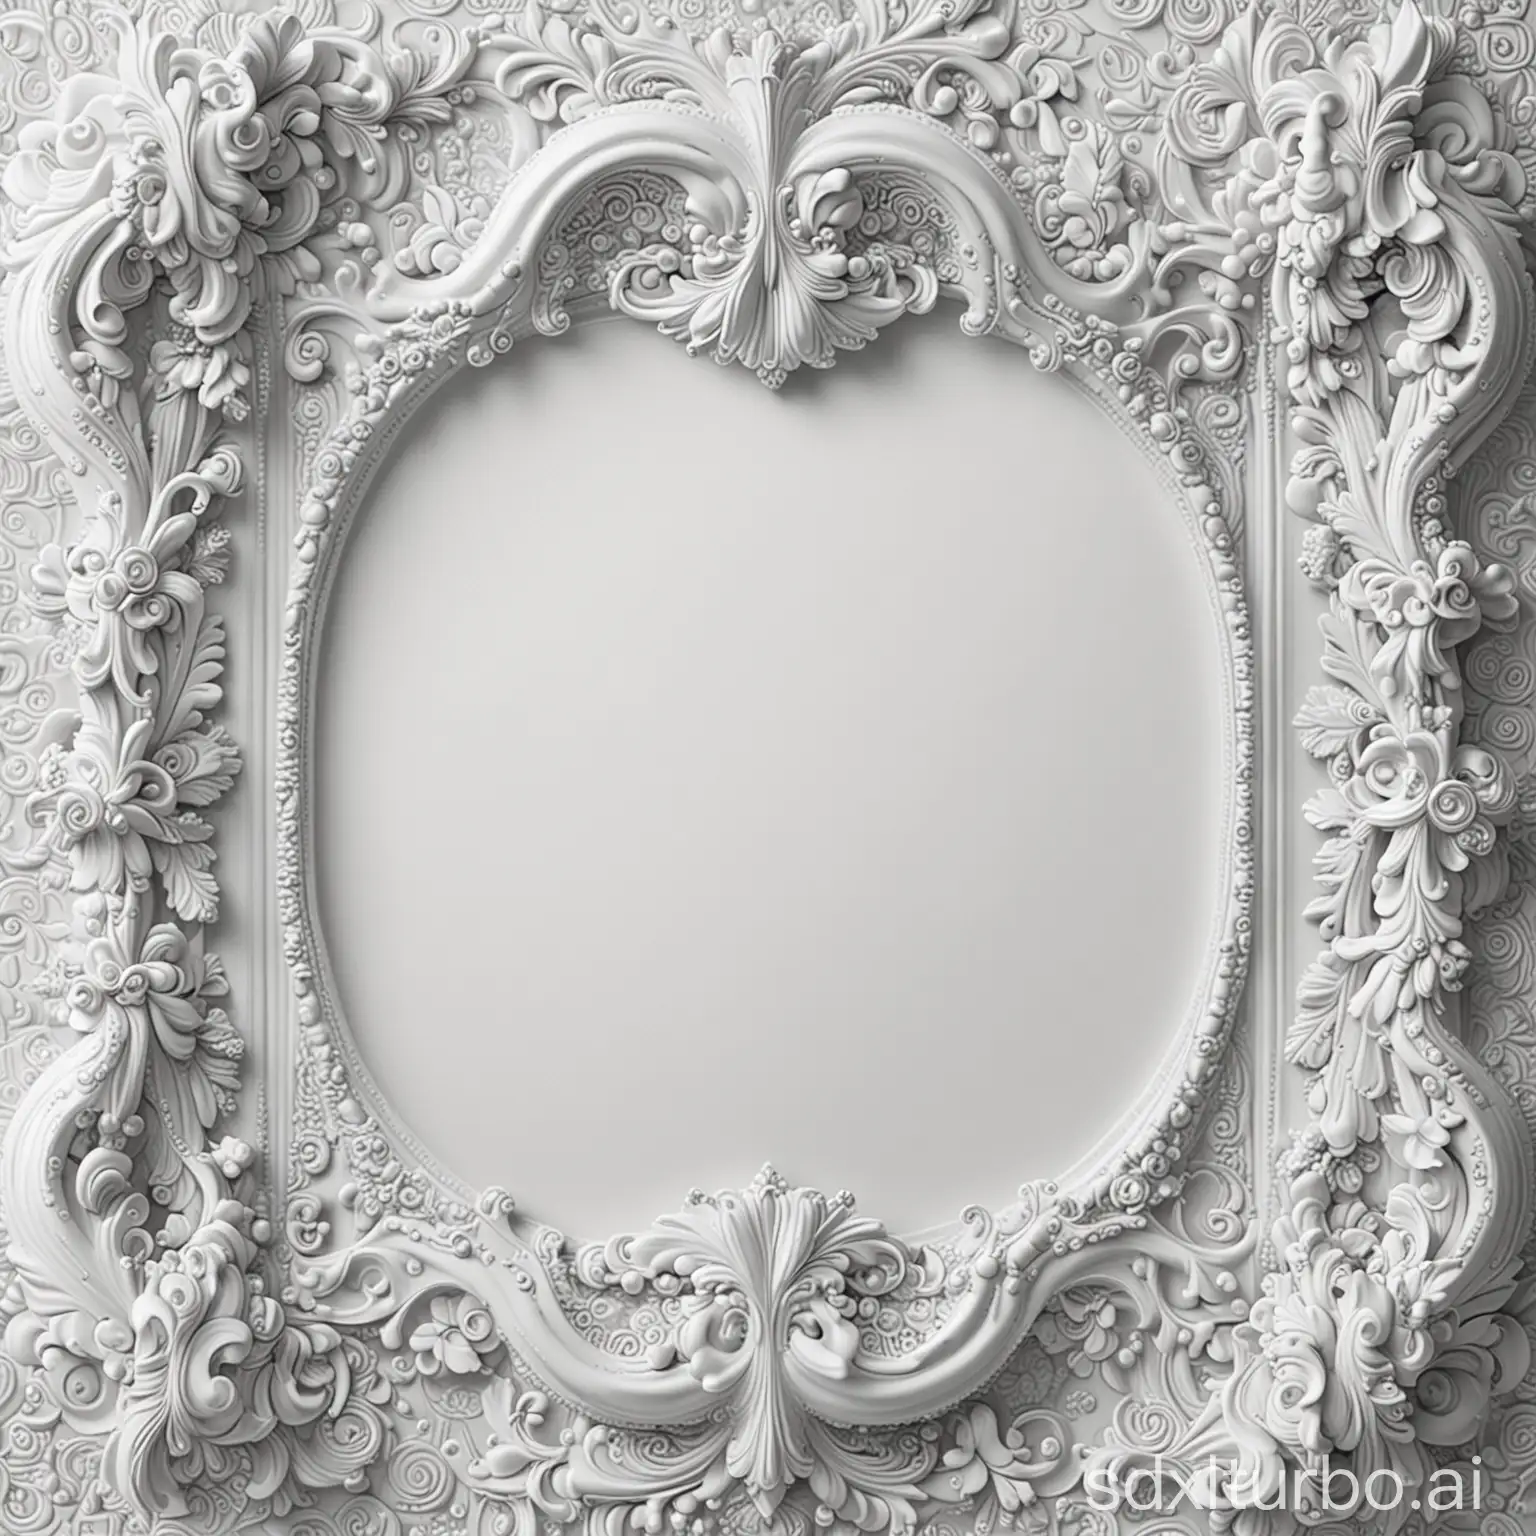 Elegant-White-and-Gray-Luxury-Background